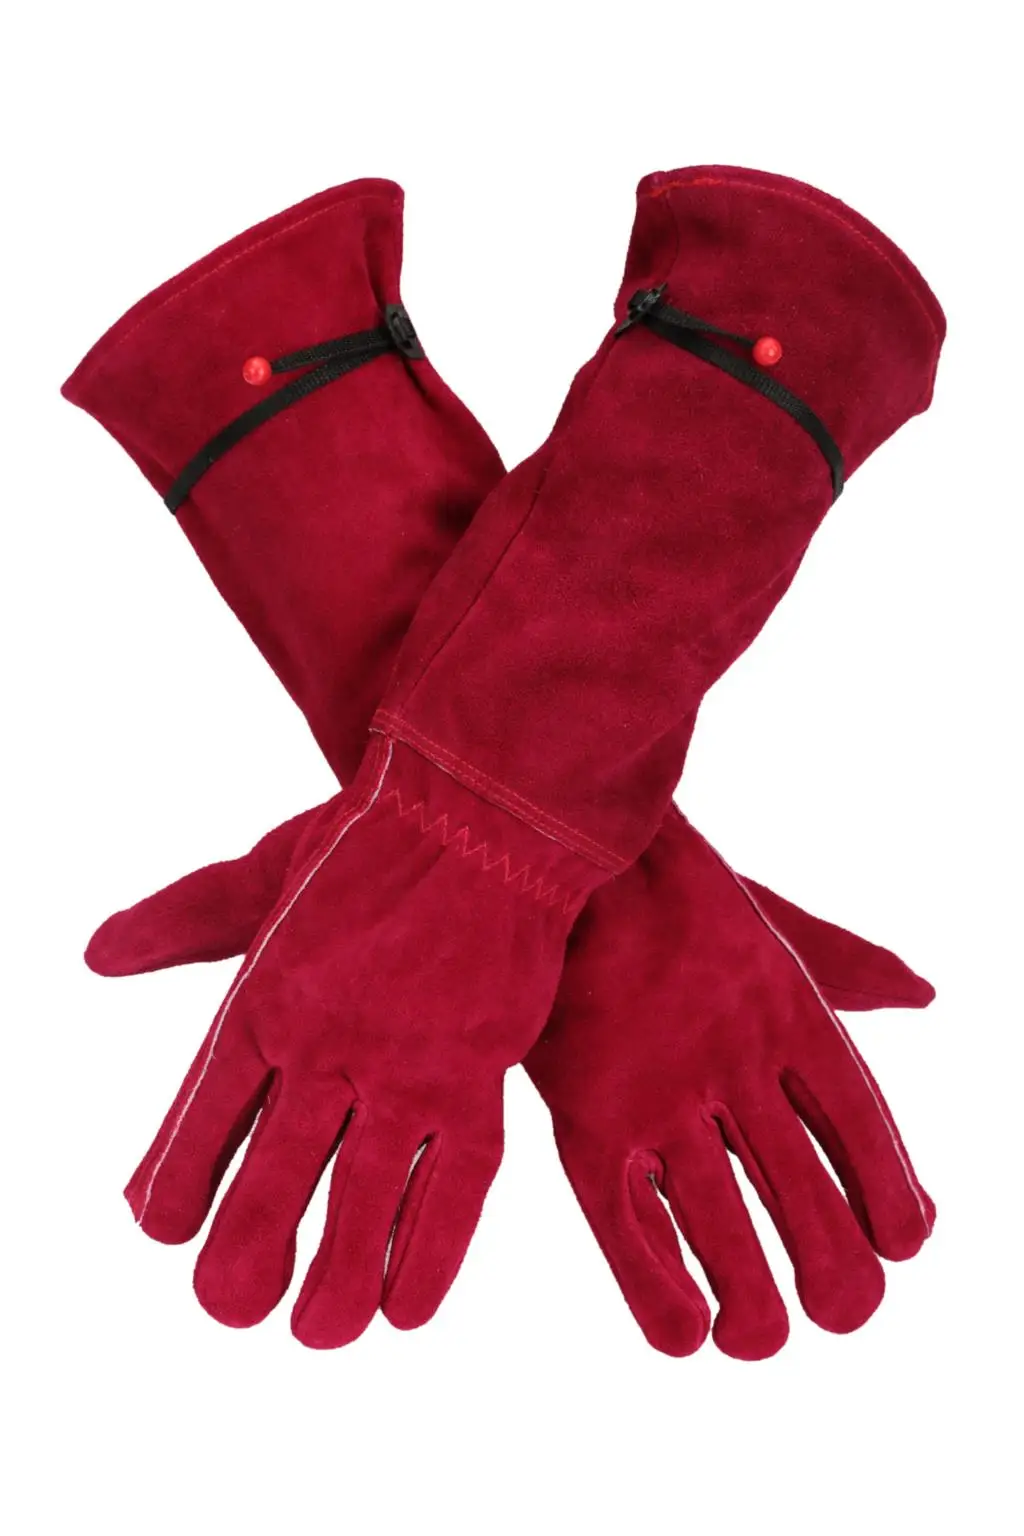 

Leather Welding Gloves - Heat/Fire Resistant, Perfect for Gardening/Tig Weld/Beekeeping/BBQ guante anticorte микроволновая печь